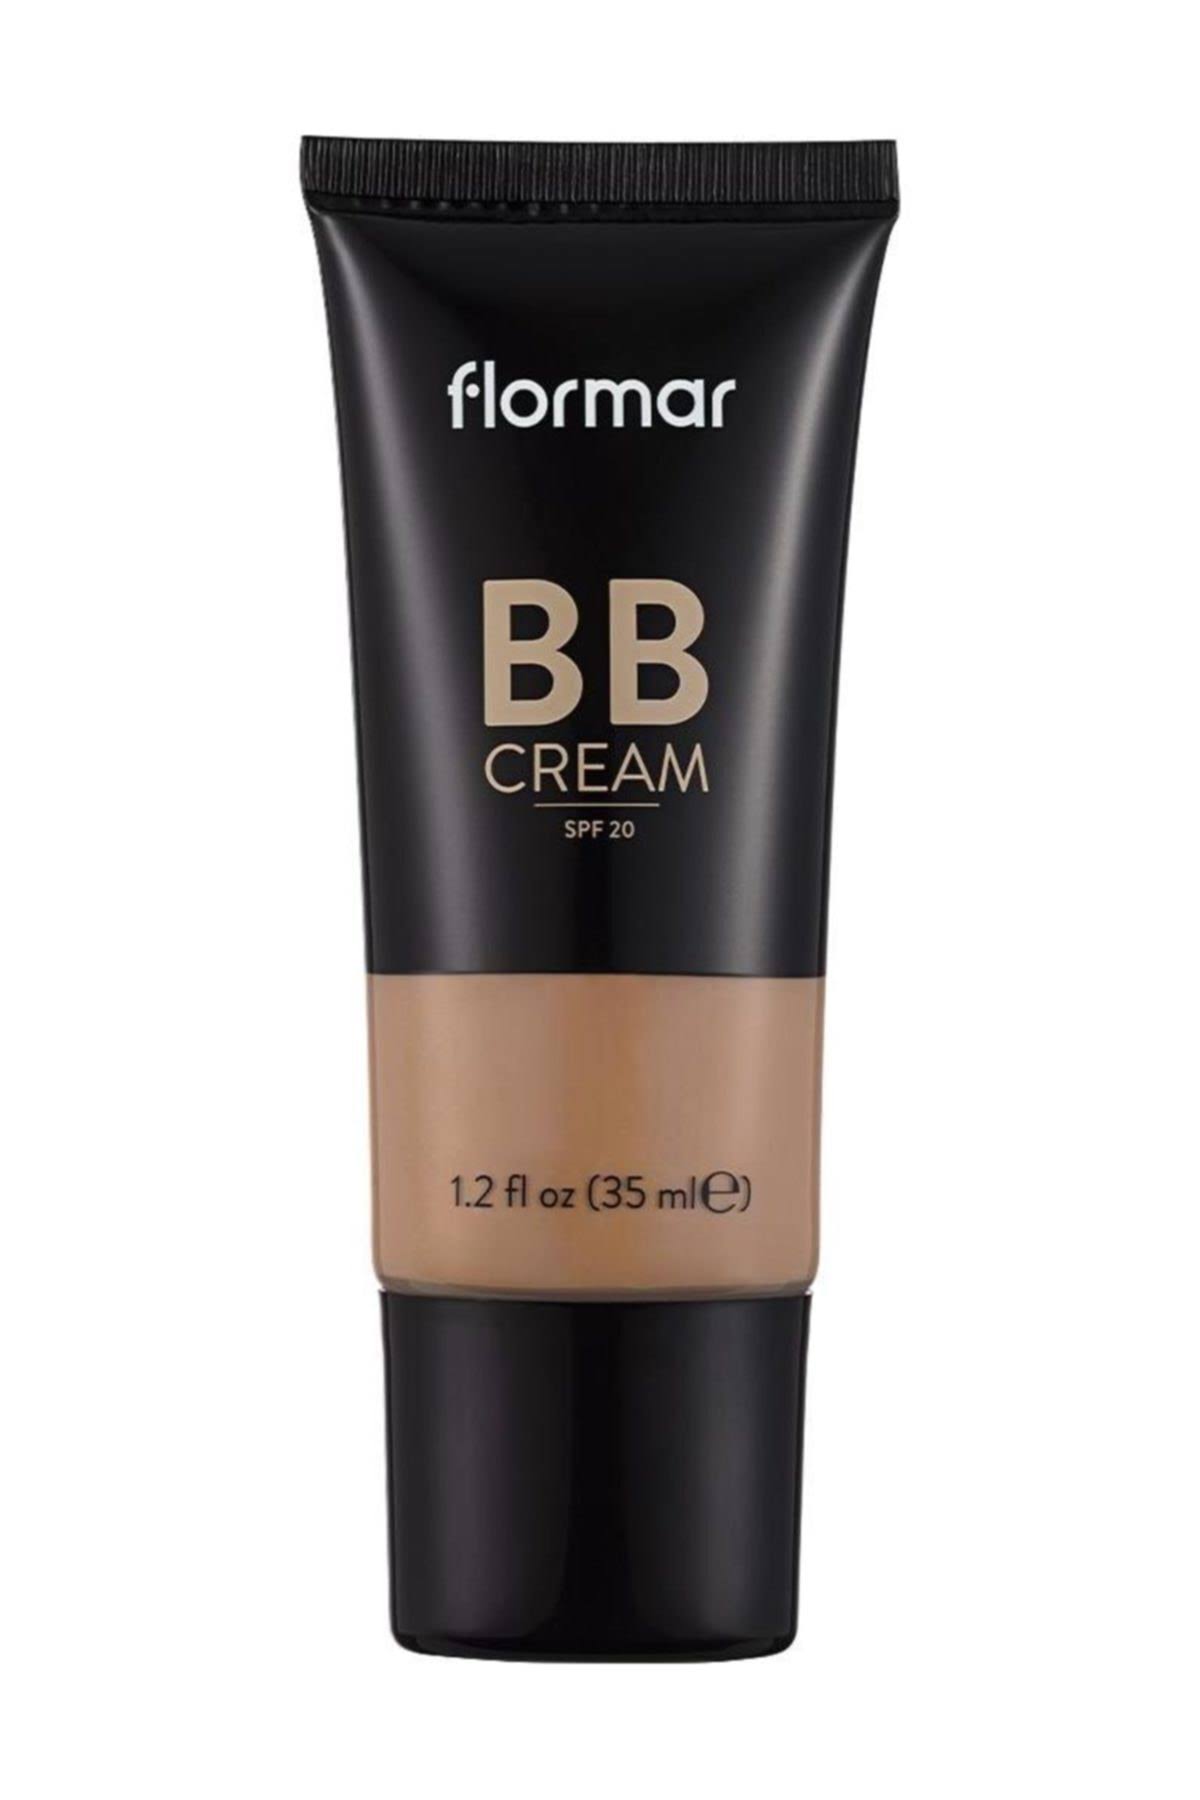 Flormar BB Cream - SPF15, BB03 Light, 35ml